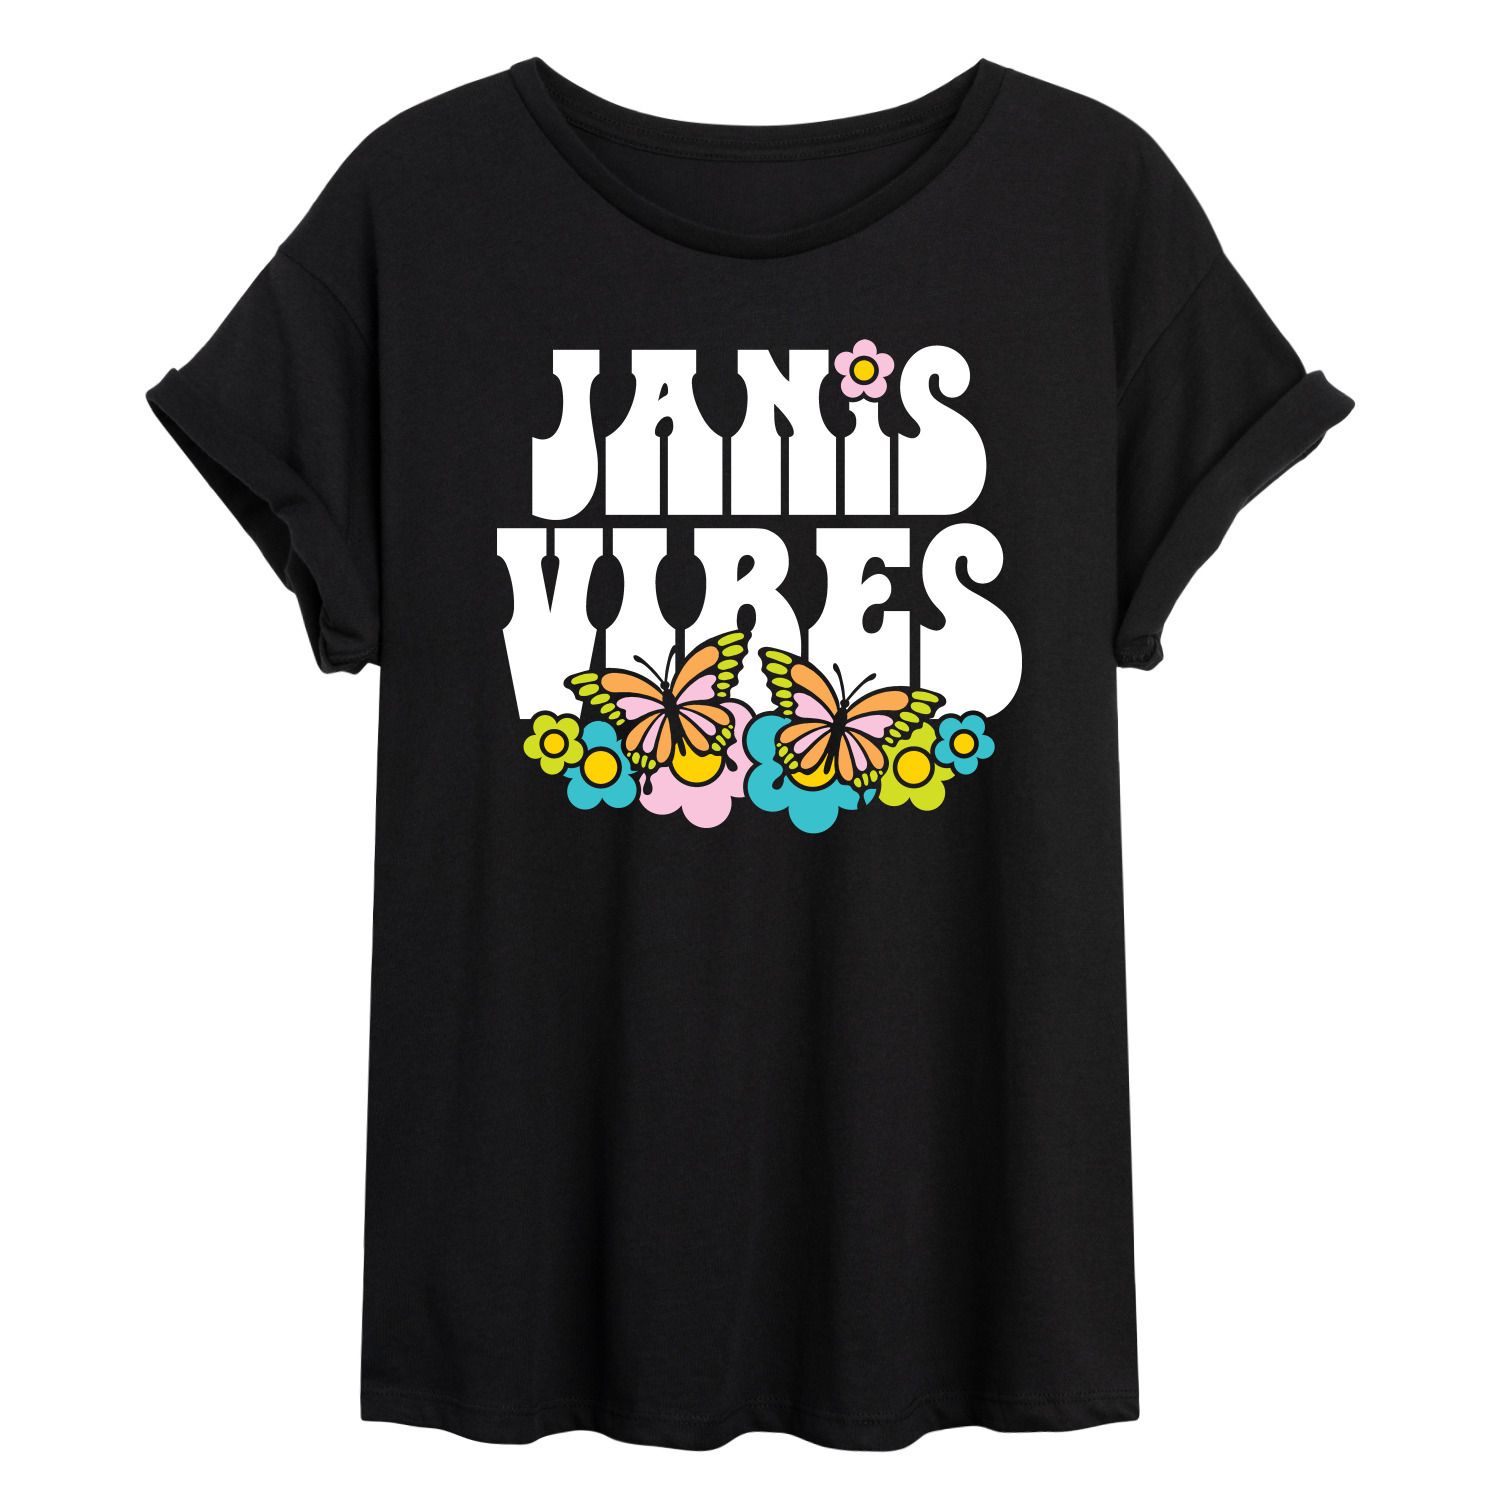 Юниорская футболка Janis Vibes с струящимся рисунком Licensed Character